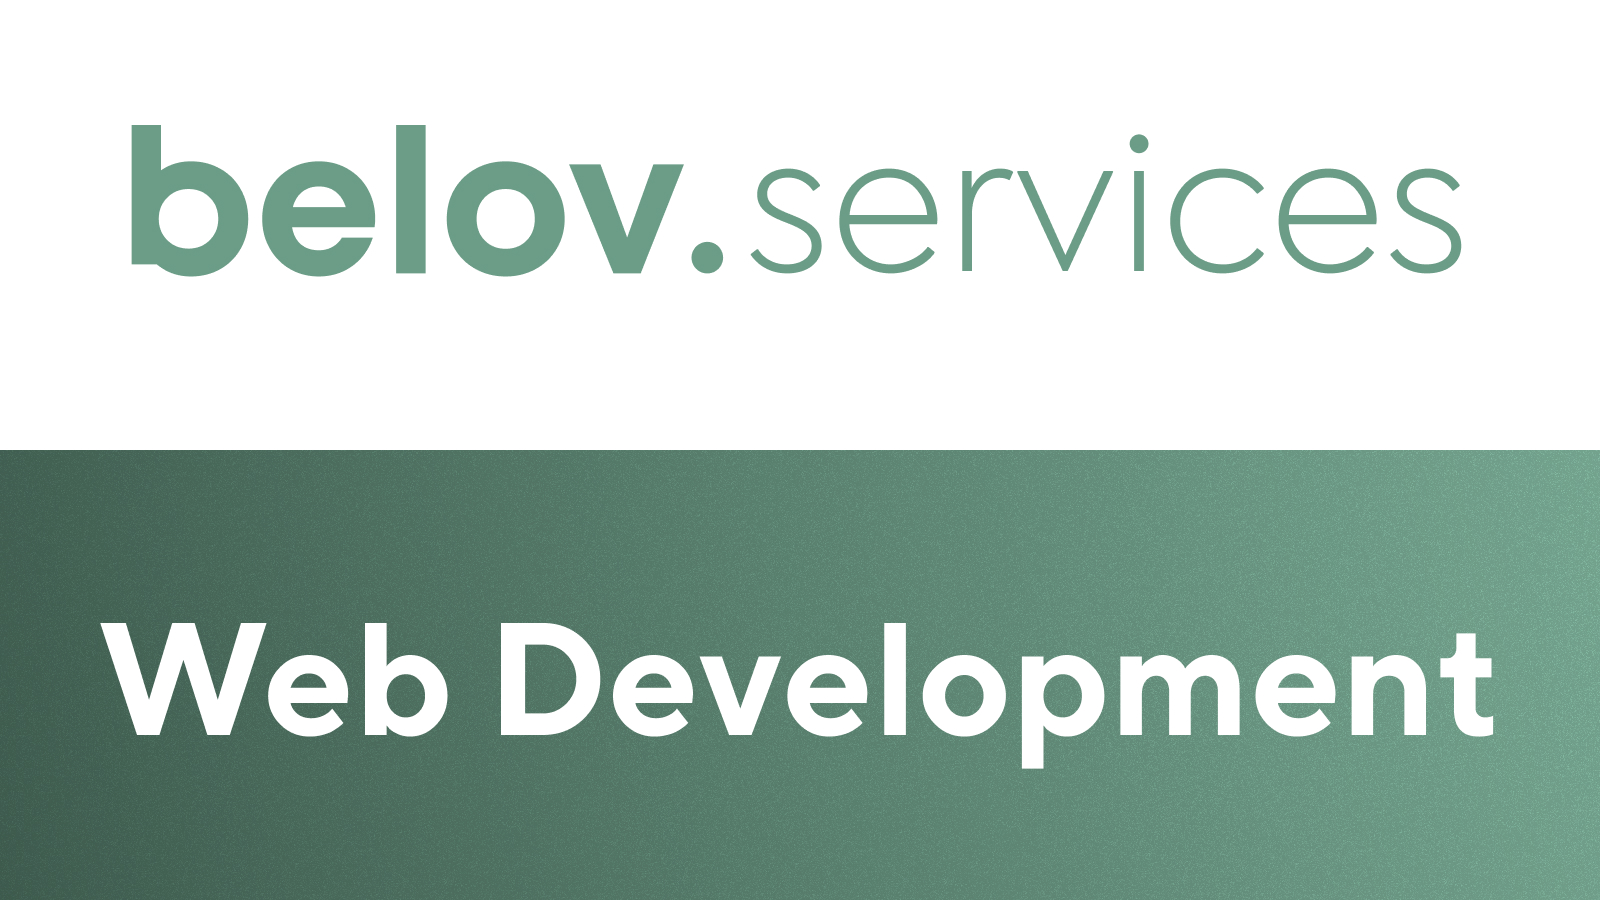 Web Development Logos - 32+ Best Web Development Logo Ideas. Free Web  Development Logo Maker. | 99designs